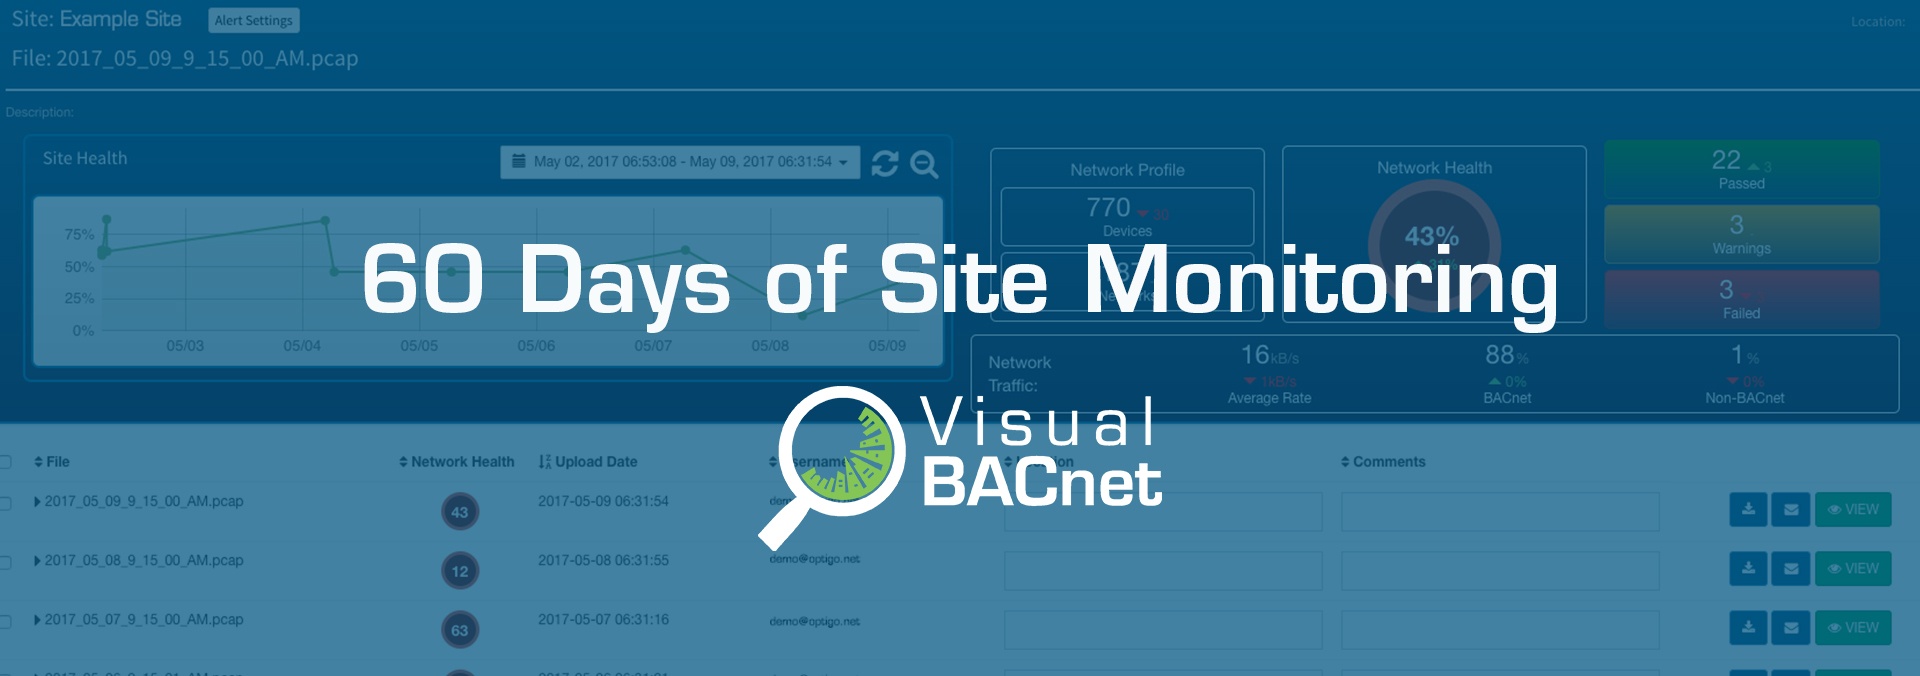 60 days site monitoring.jpg